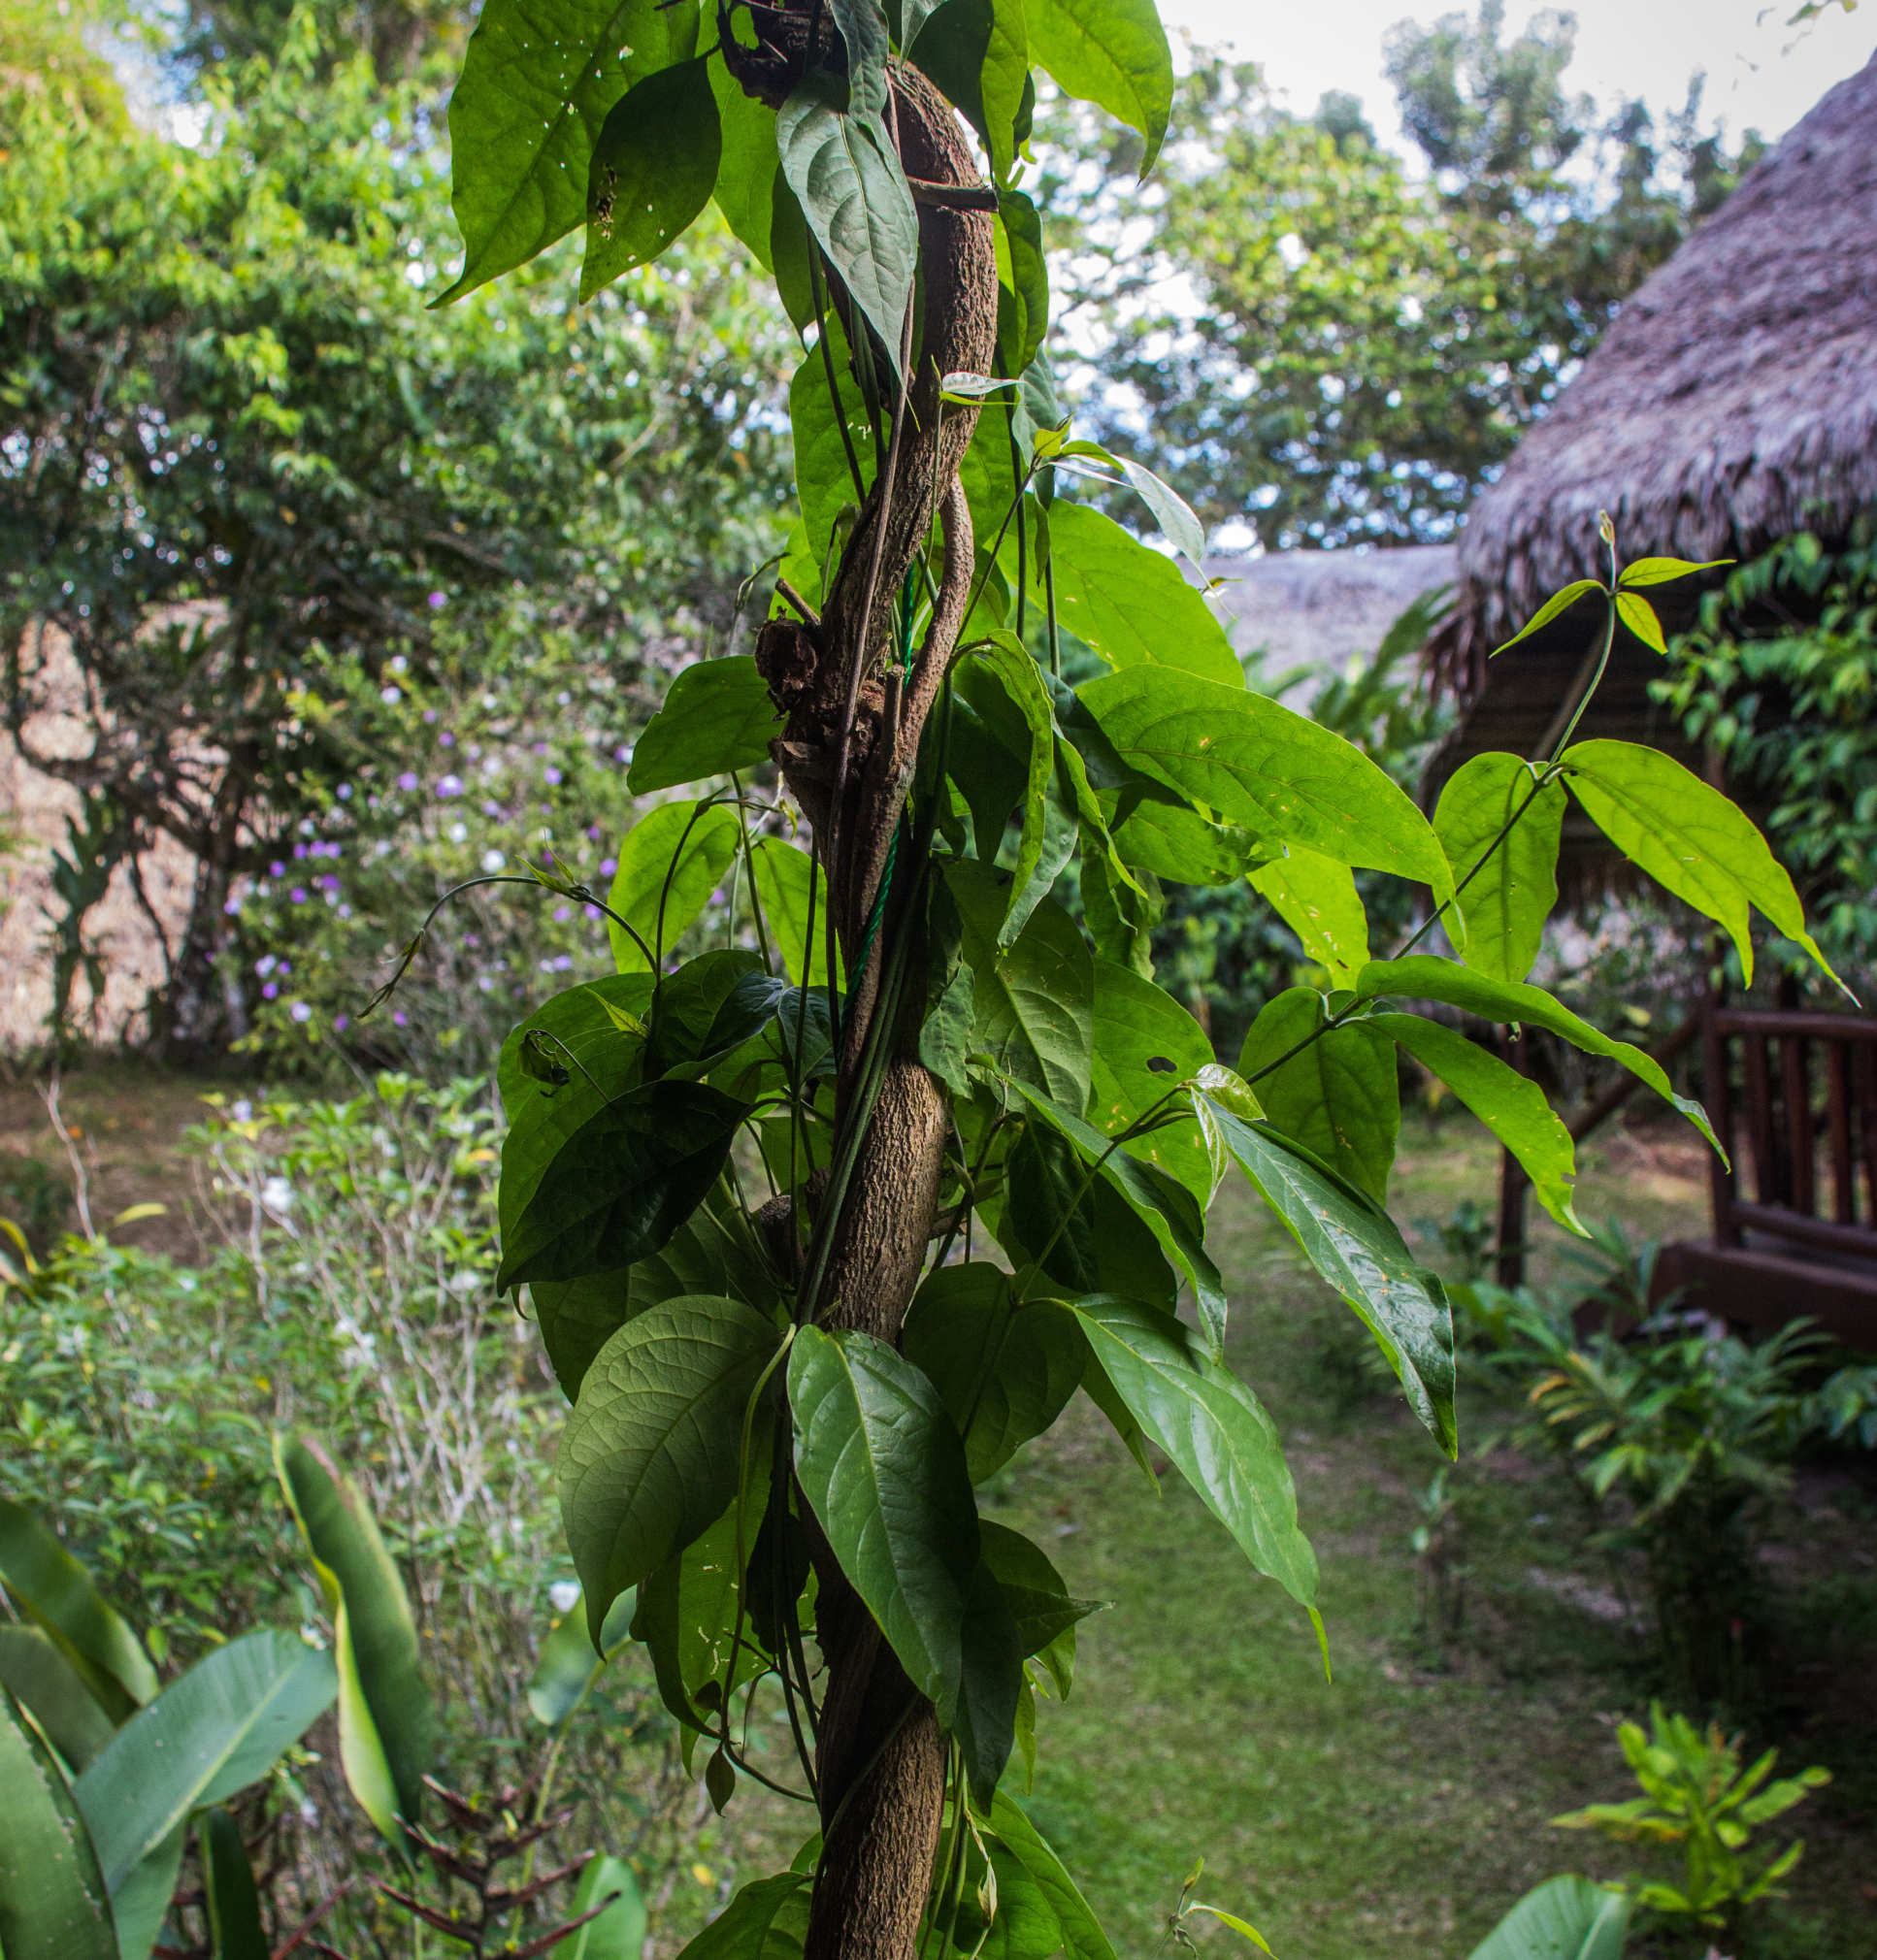 The ayahuasca vine